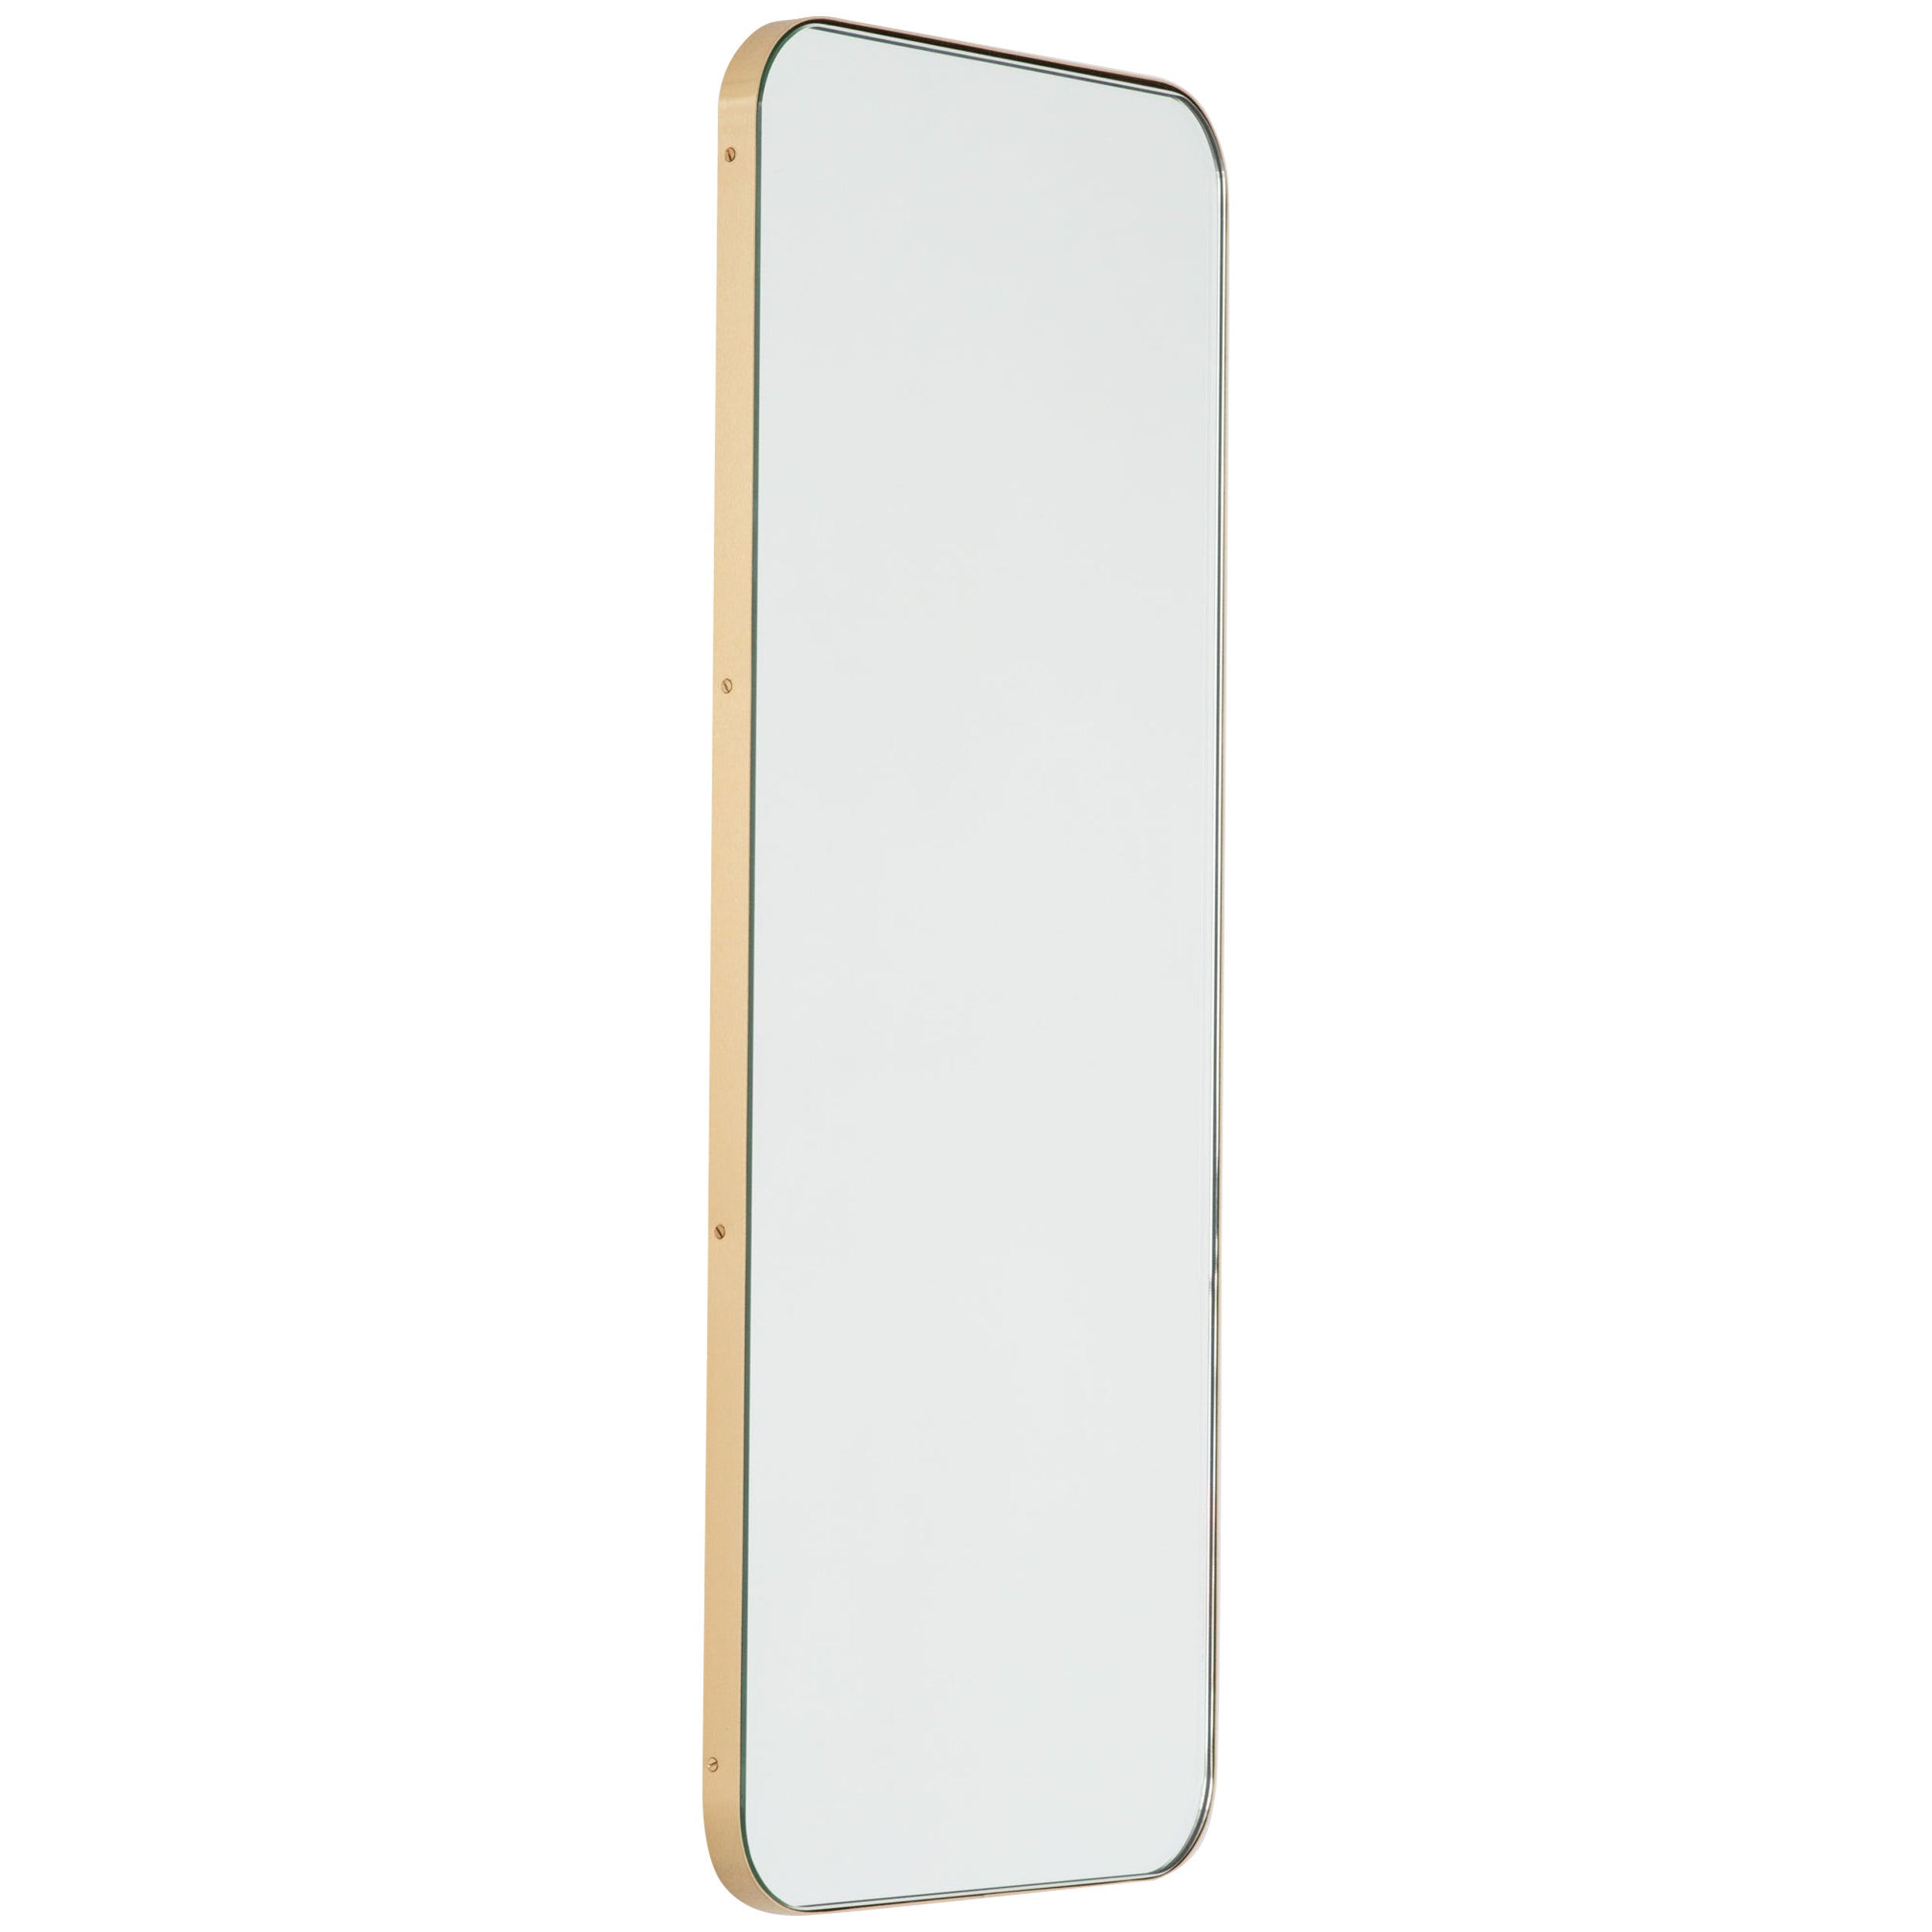 Quadris Rectangular Minimalist Mirror with a Brass Frame, Medium For Sale